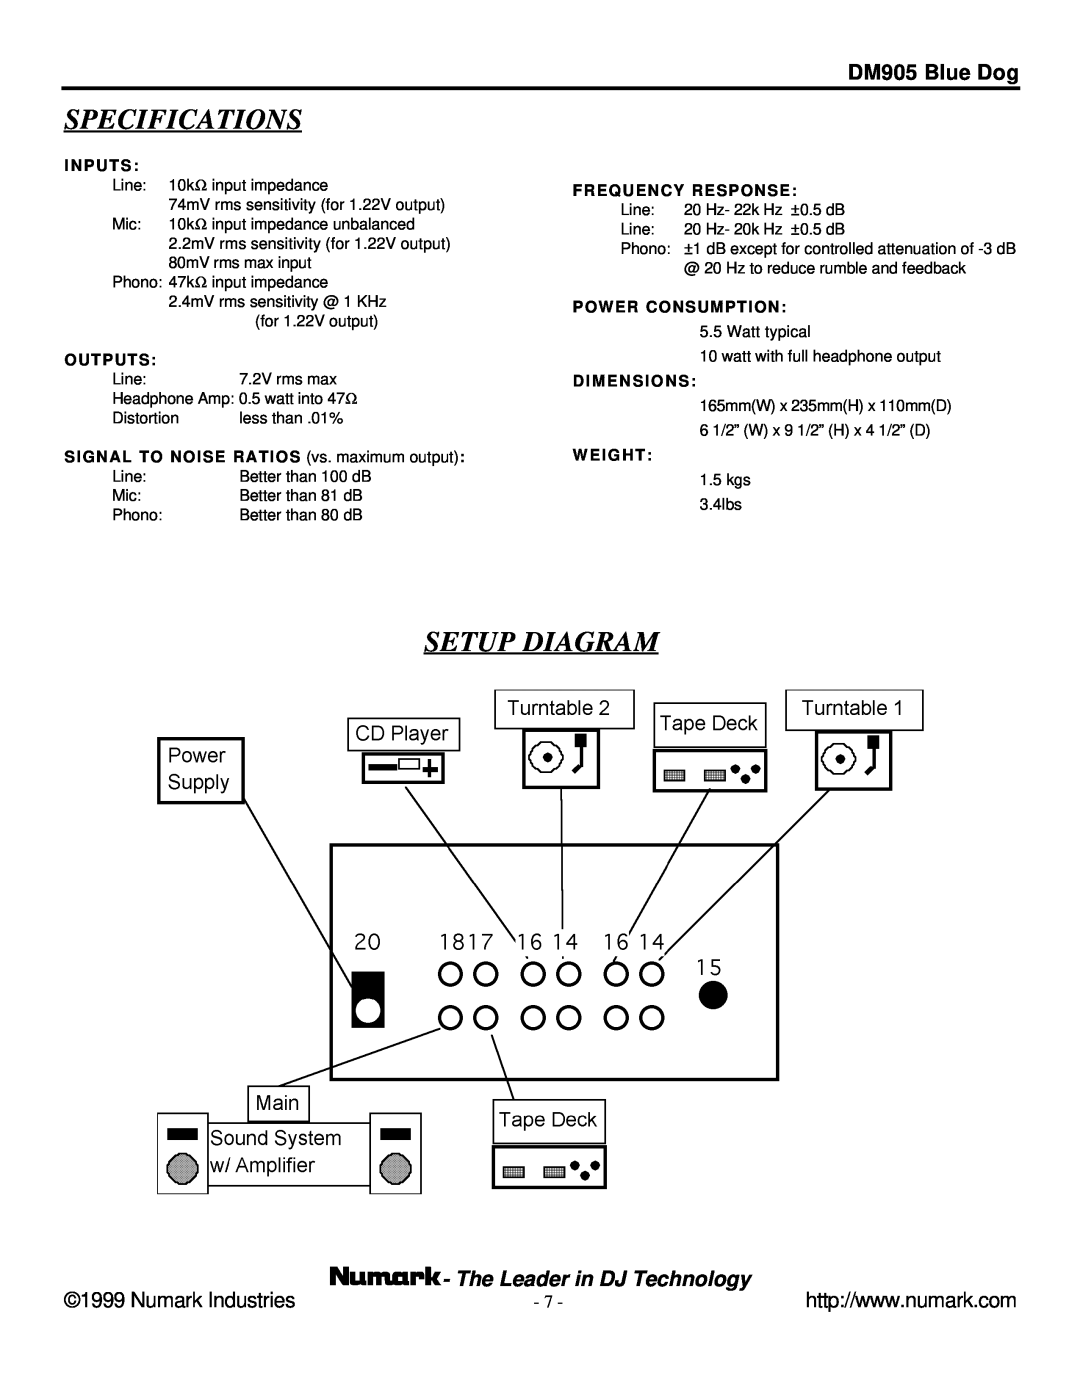 Numark Industries Specifications, Setup Diagram, DM905 Blue Dog, Numark Industries, The Leader in DJ Technology 